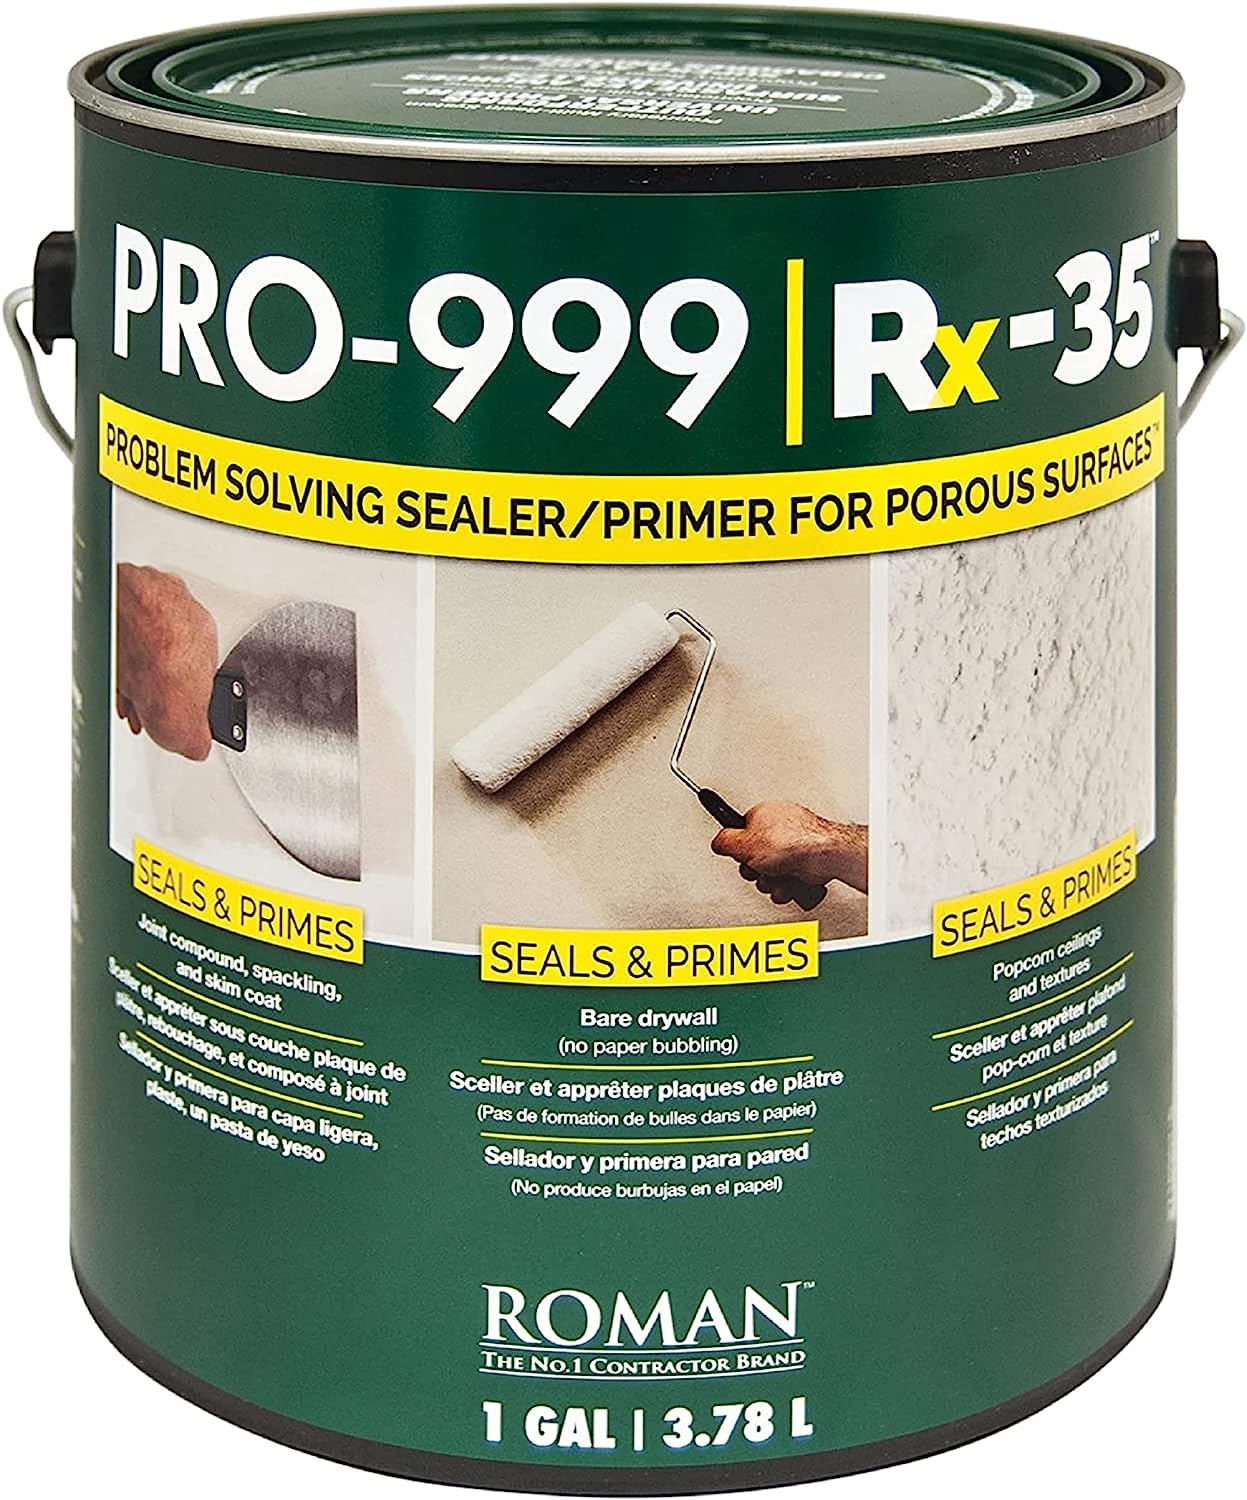 ROMAN Rx-35 Sealer/Primer for Torn Drywall, Skim Coat, [...]